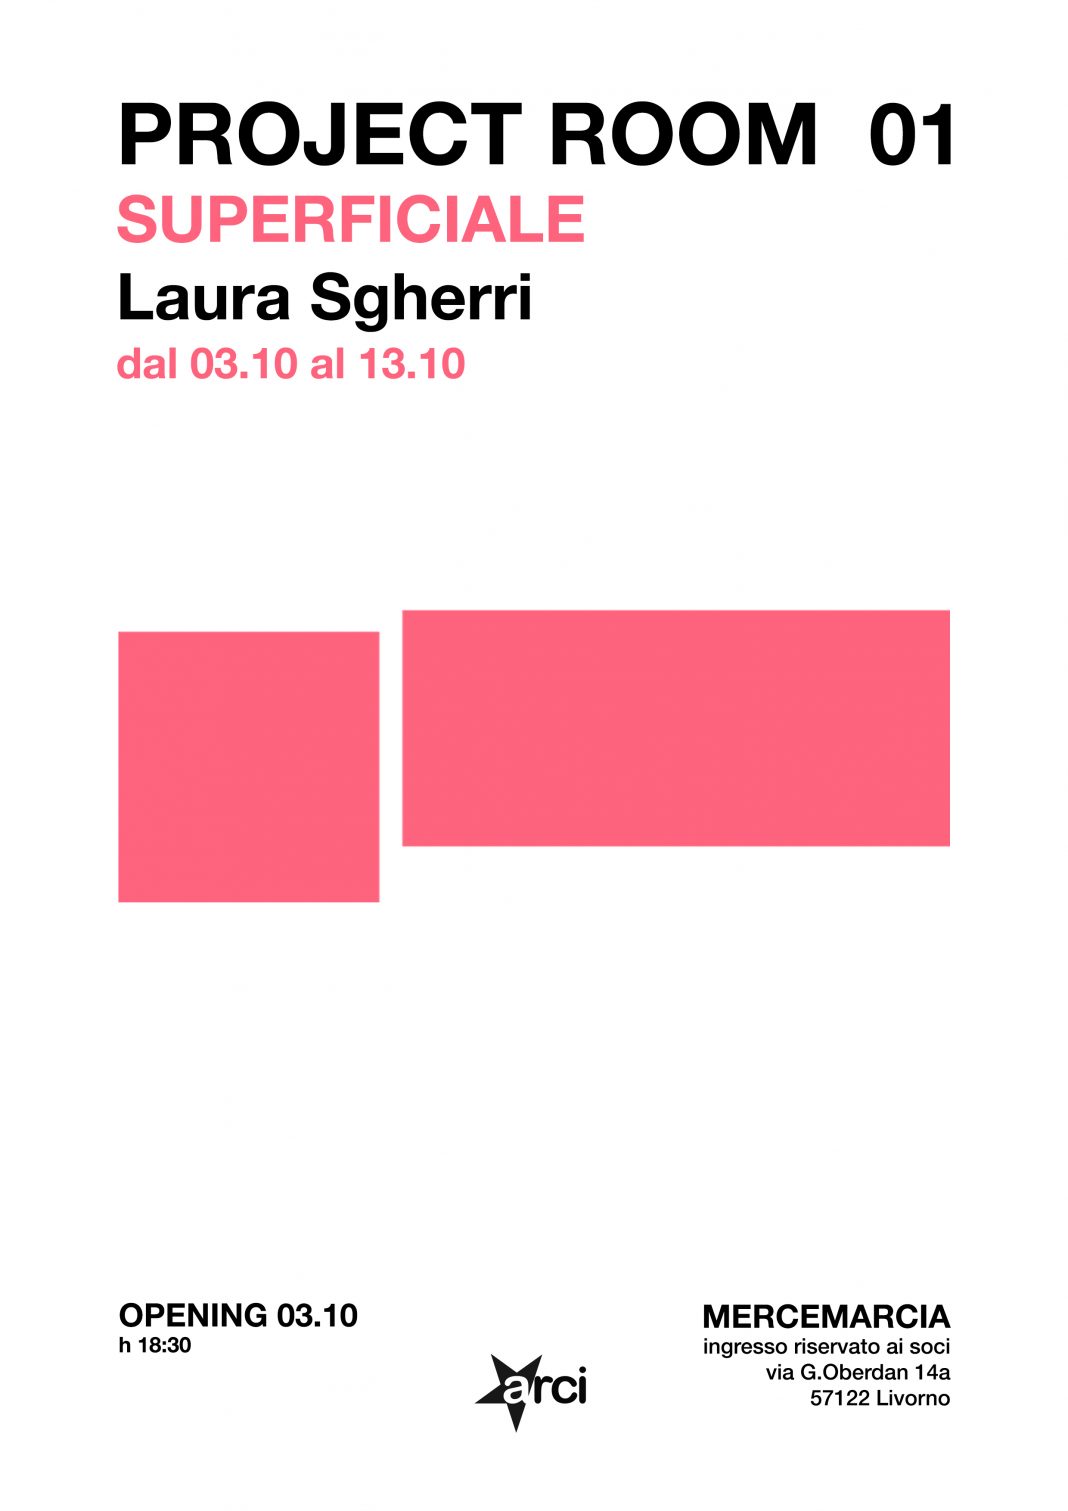 Project Room #01: Laura Sgherri – Superficialehttps://www.exibart.com/repository/media/formidable/11/flyer-a4-1068x1511.jpg